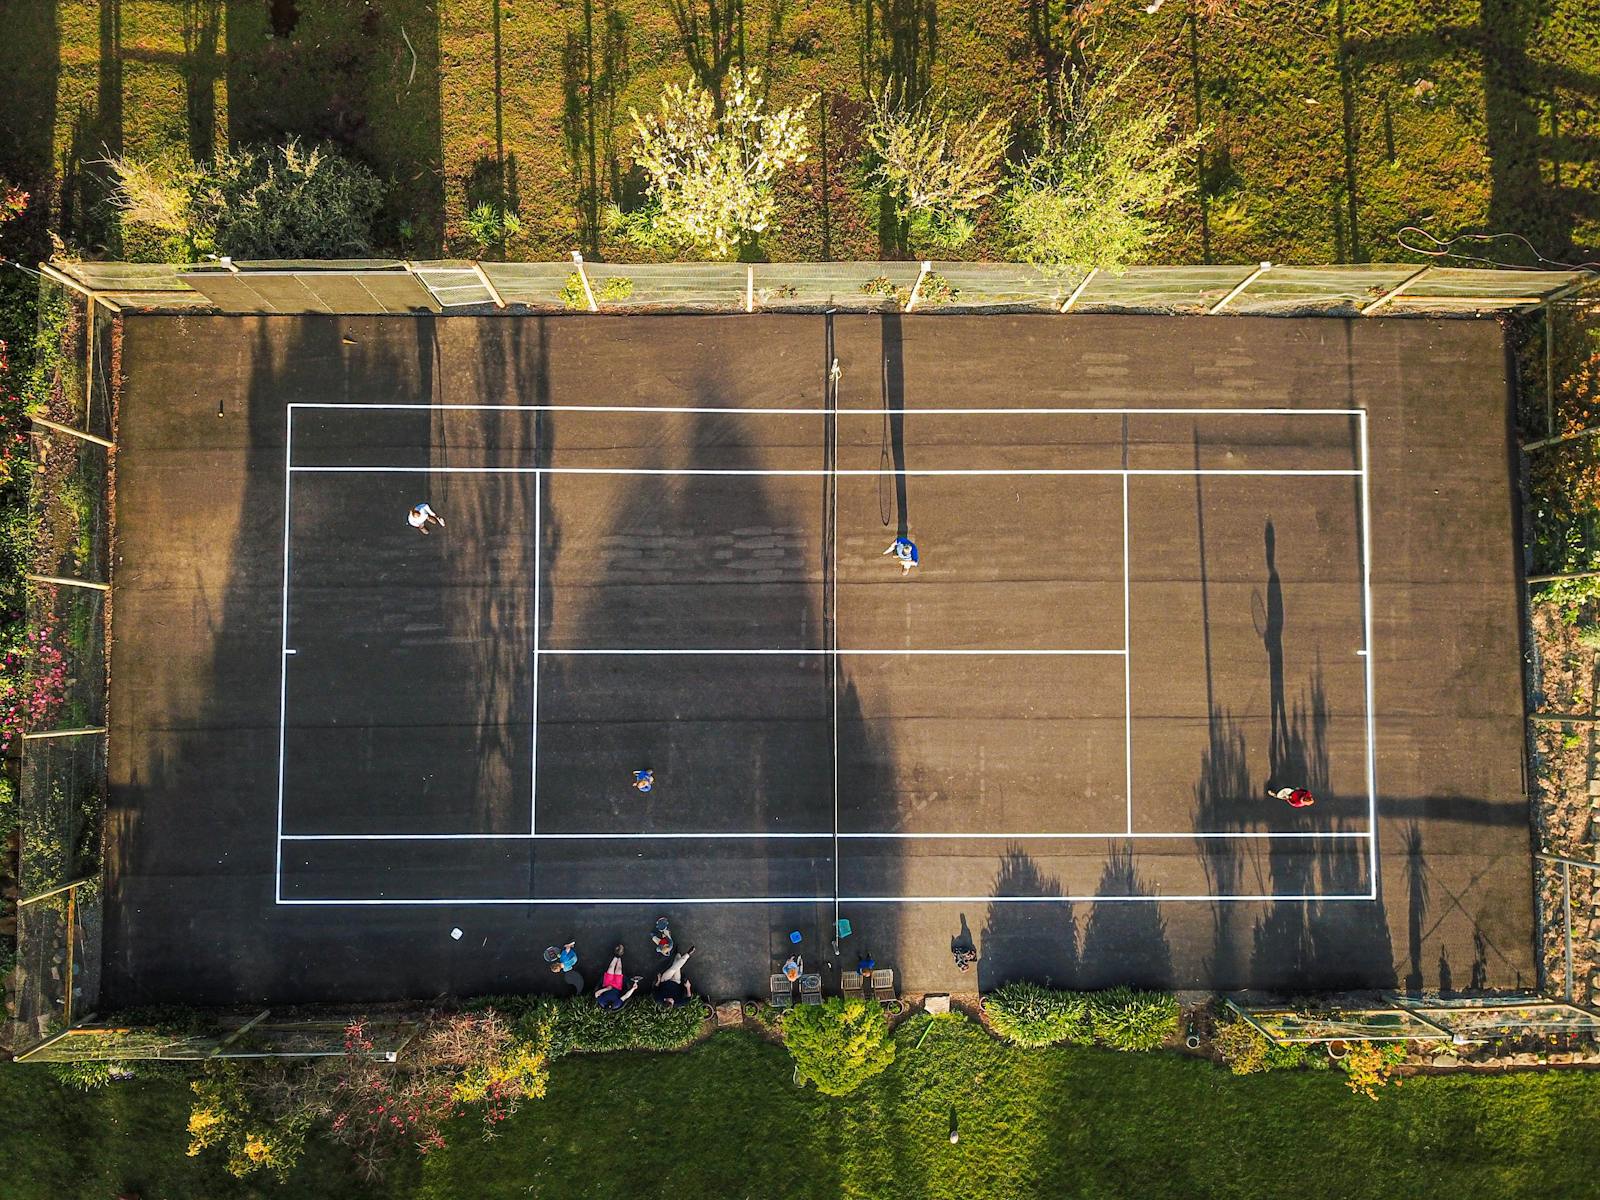 Cressy House tennis court